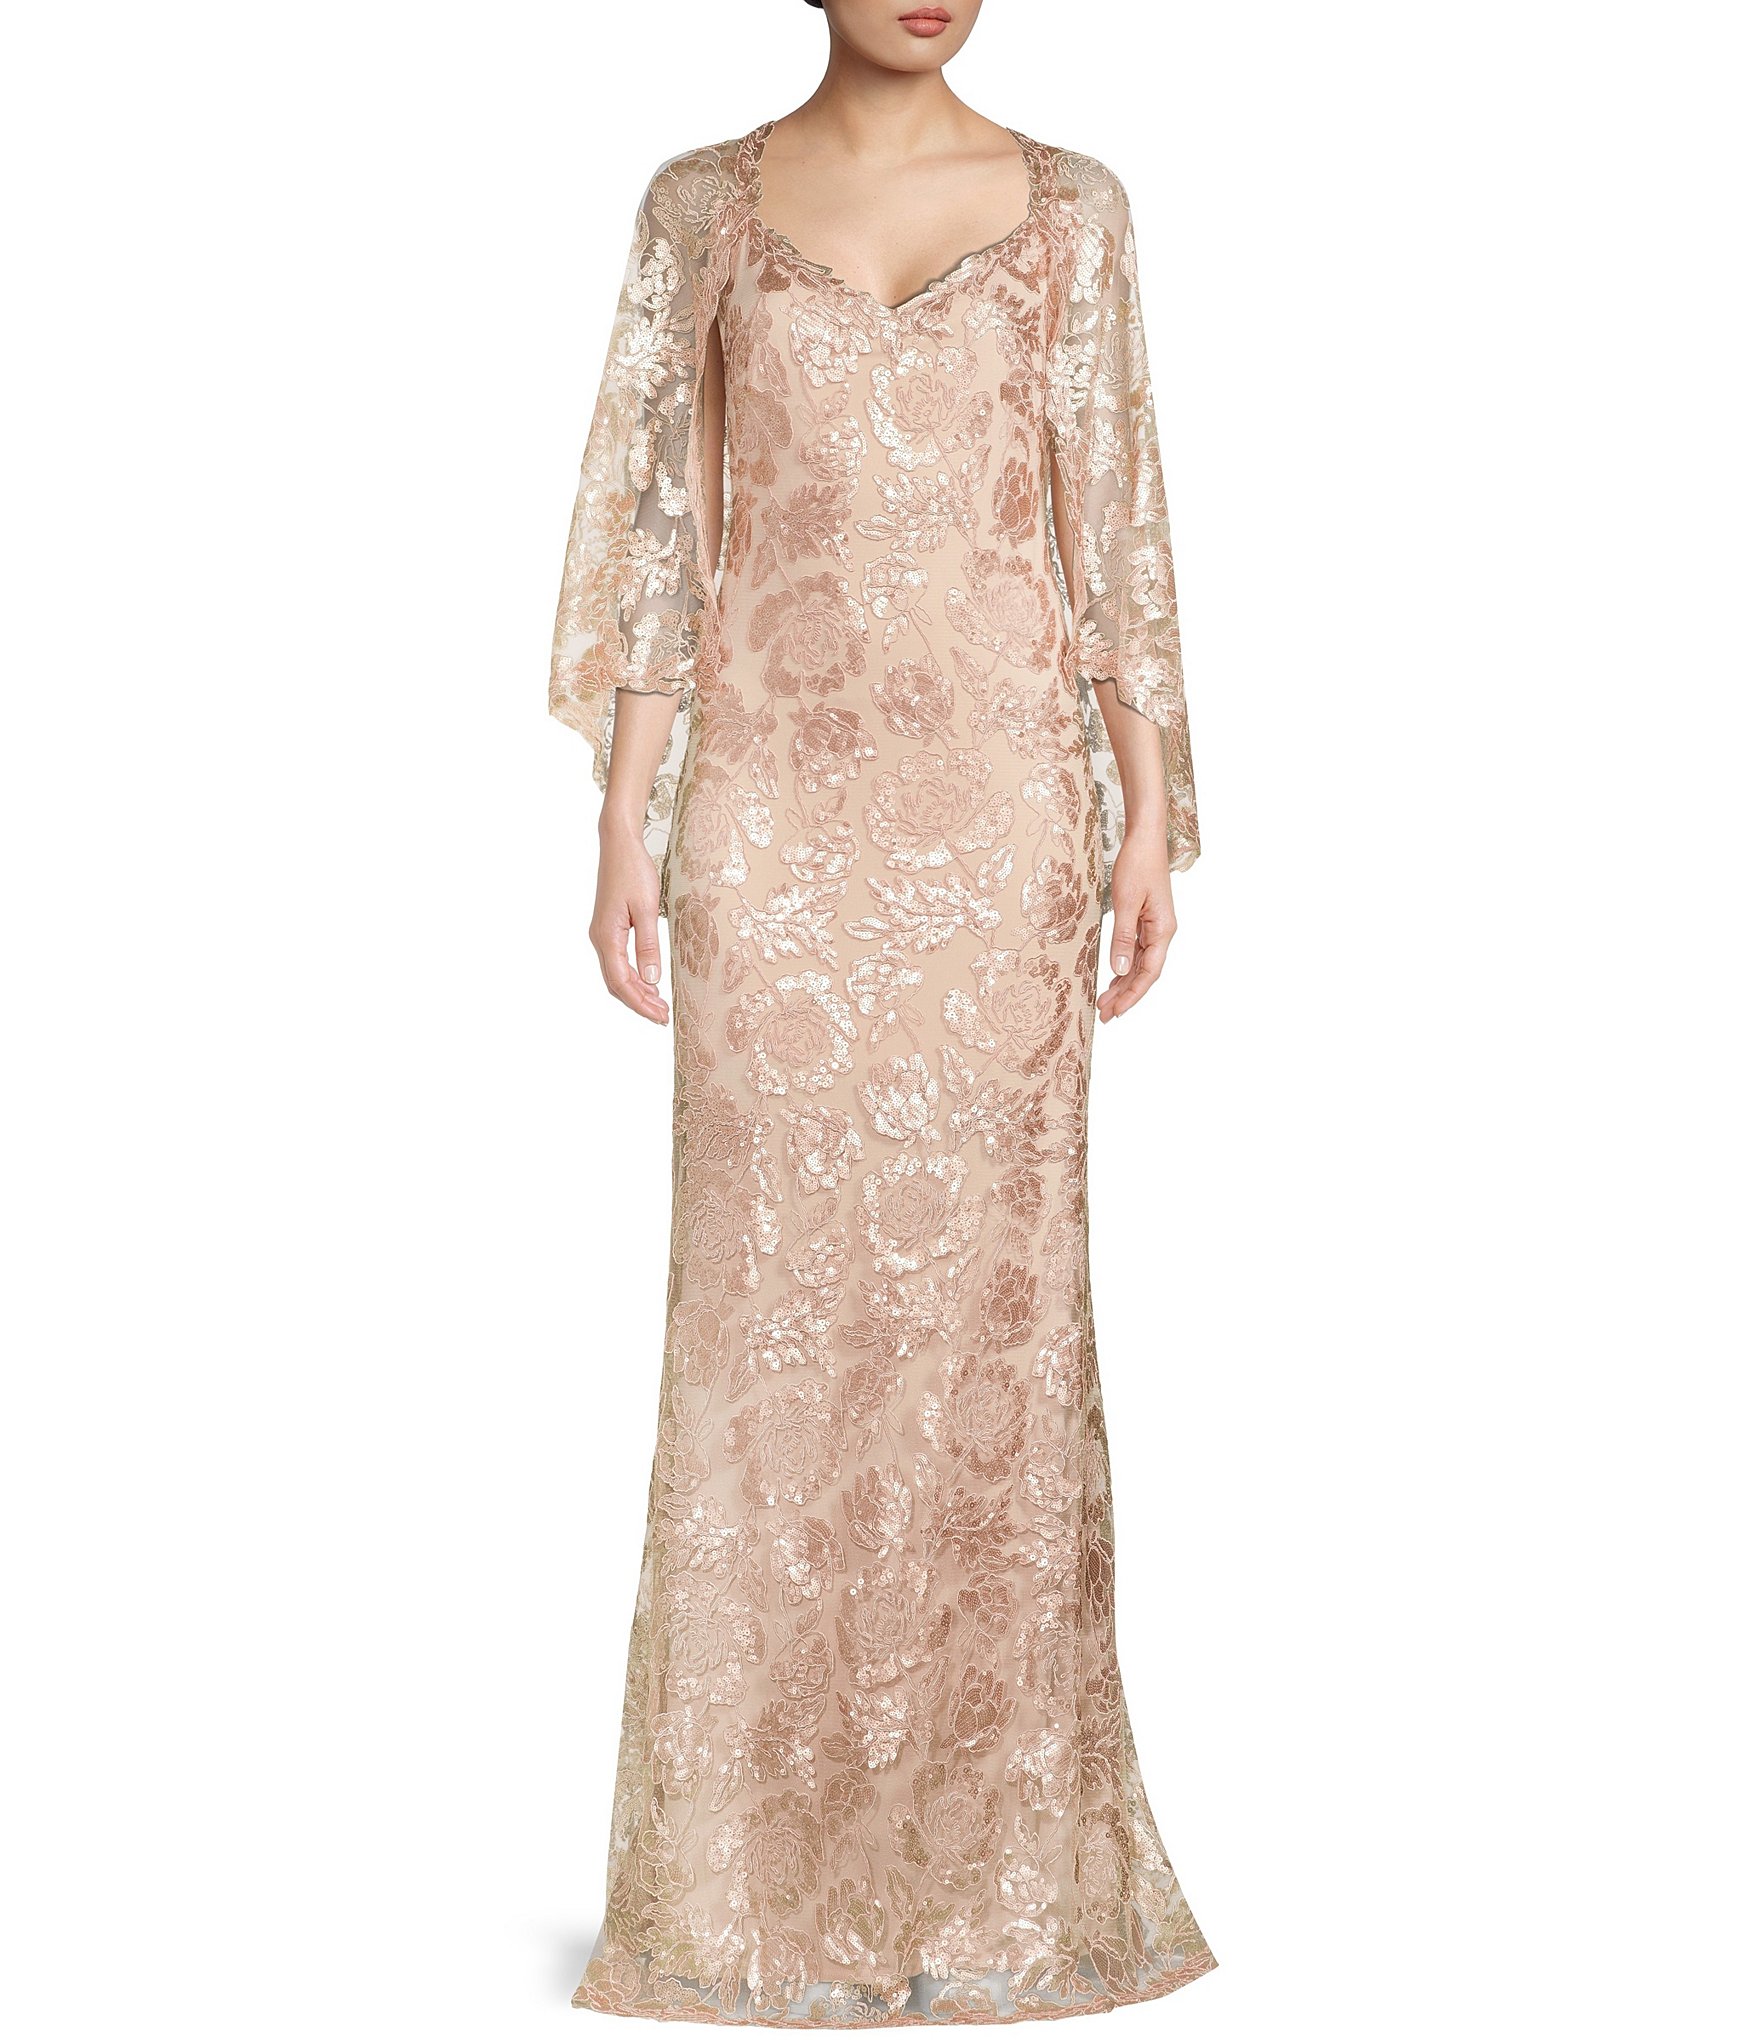 Sale & Clearance One-Shoulder Women's Wedding Dresses & Bridal Gowns |  Dillard's